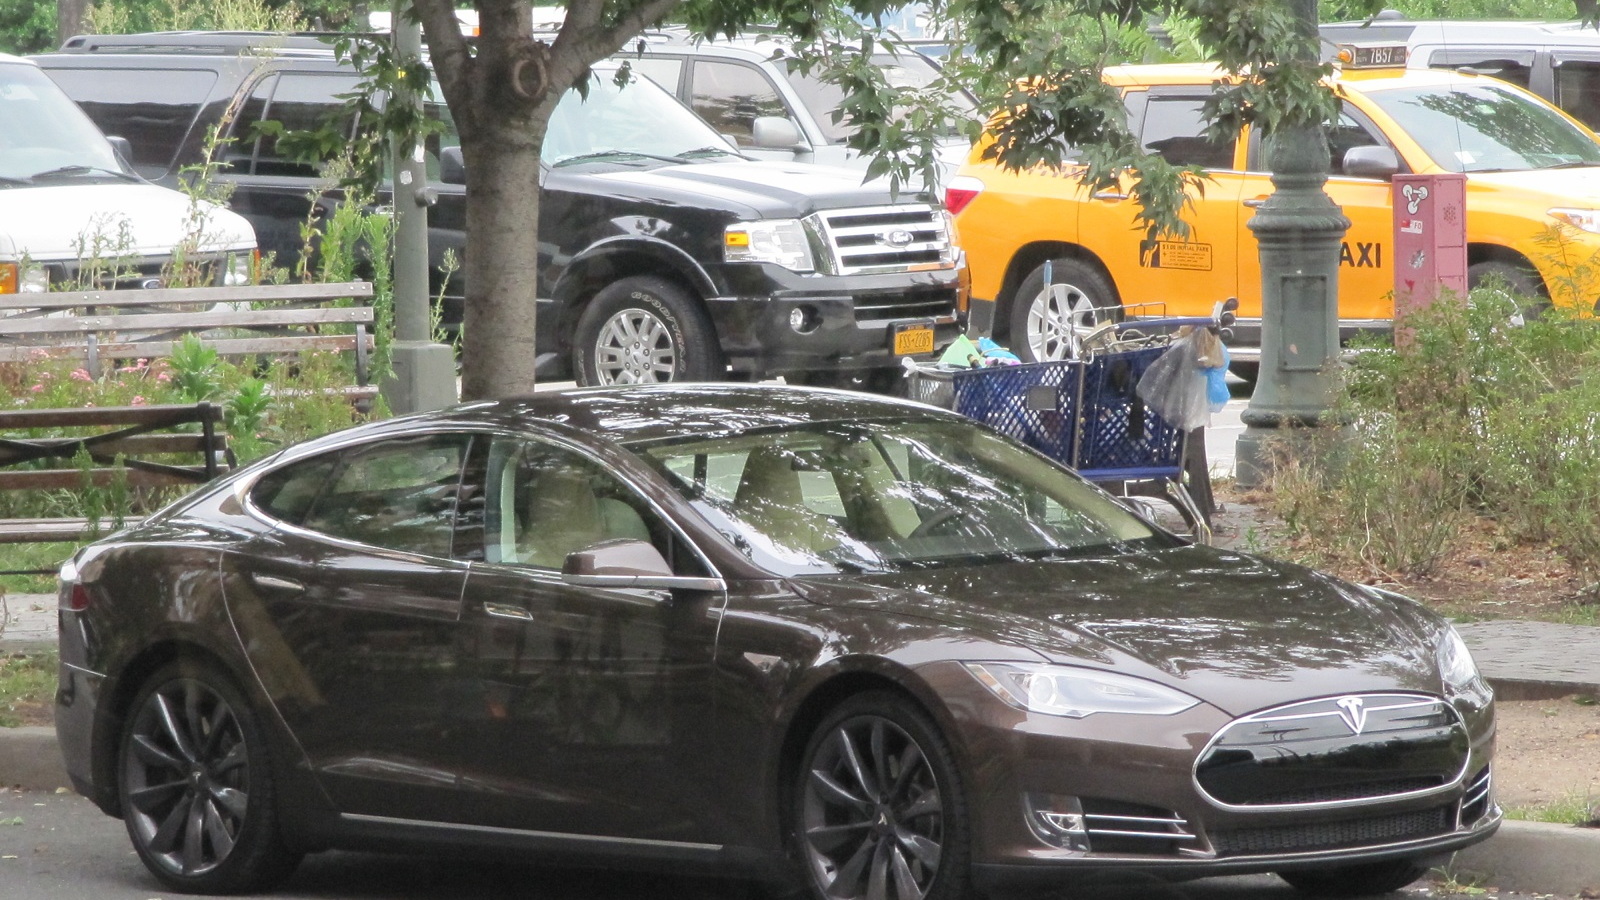 2012 Tesla Model S, brief test drive, New York City, July 2012